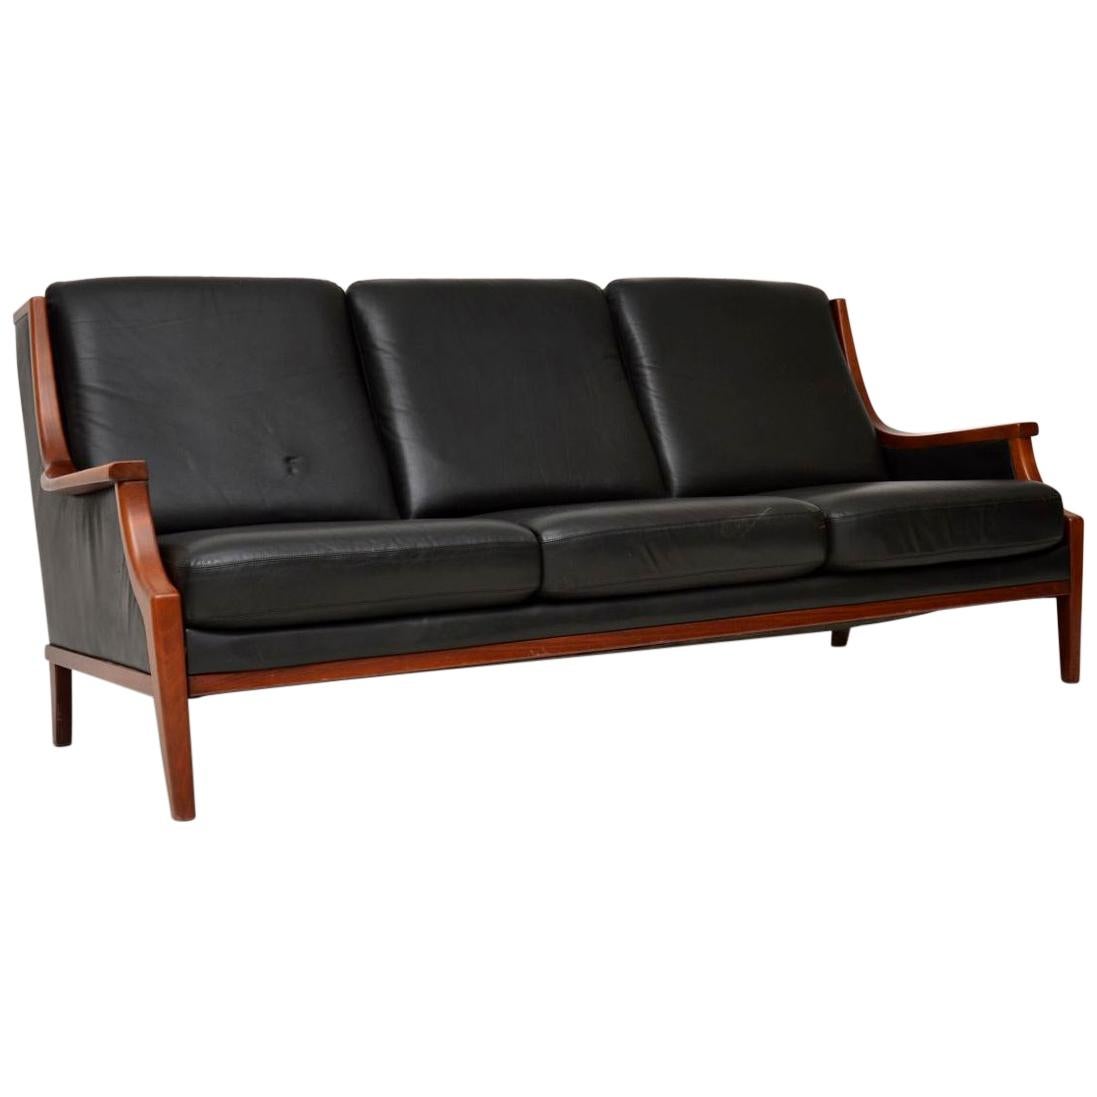 1970s Vintage Danish Leather Sofa